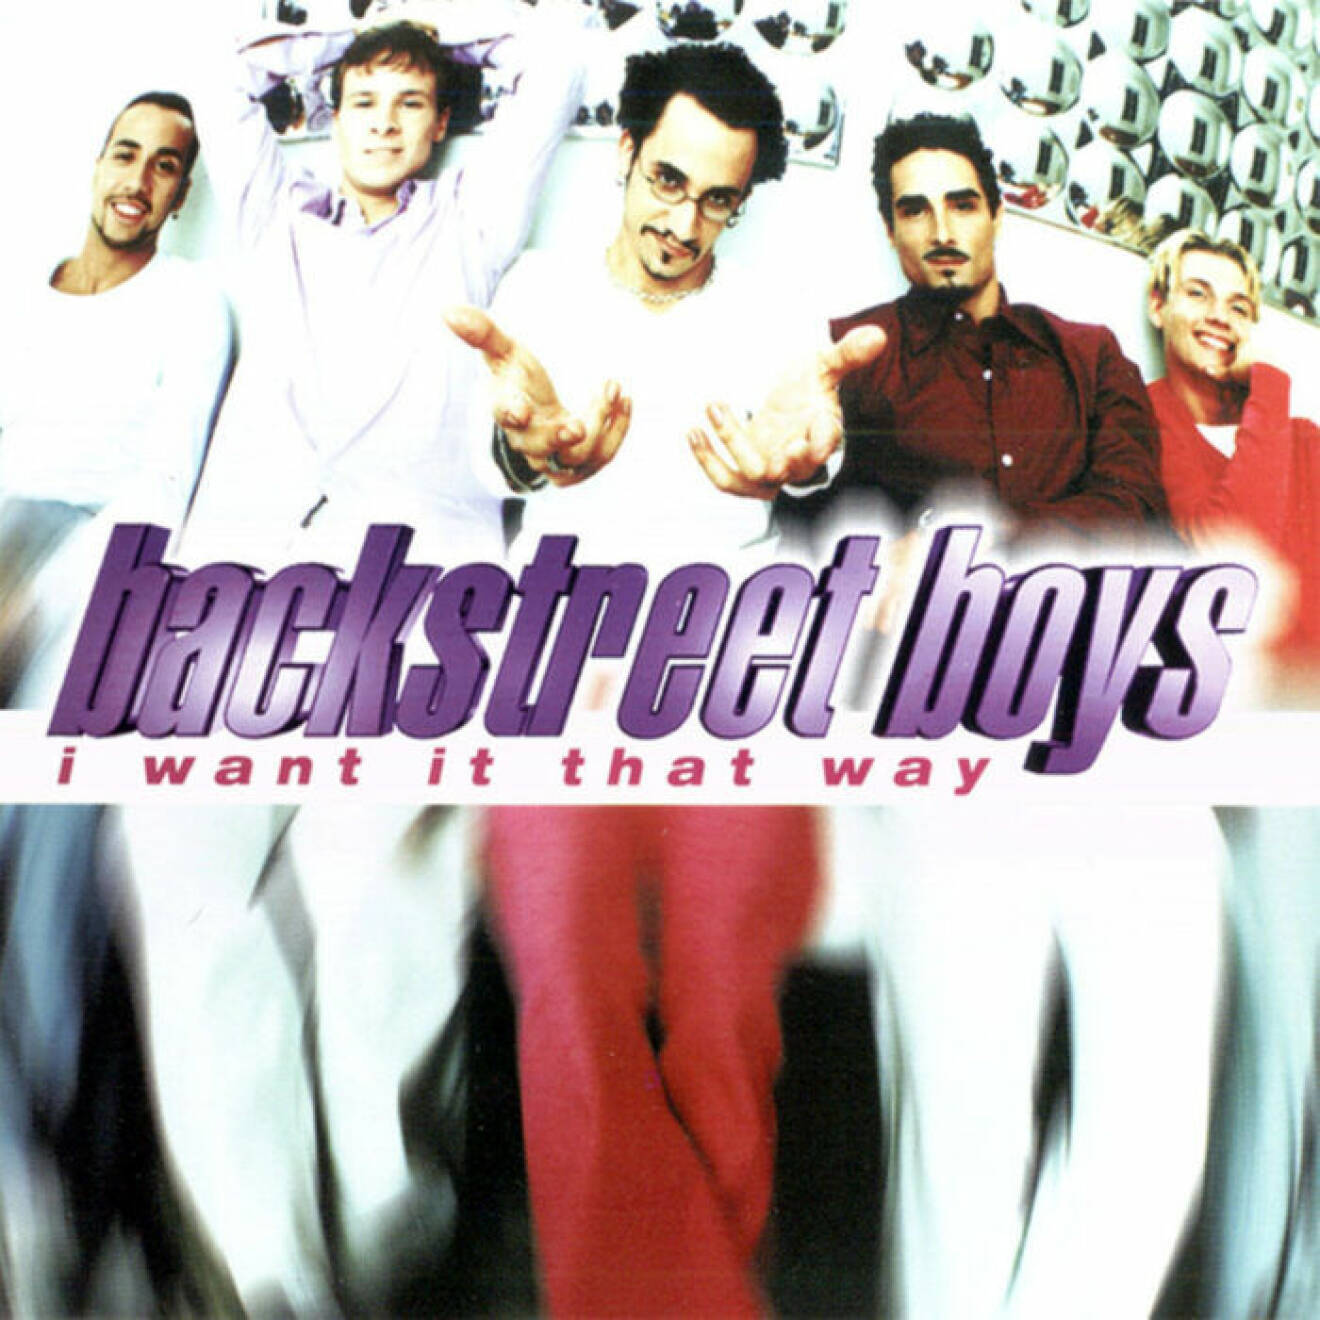 Backstreet Boys singel I Want It That Way.